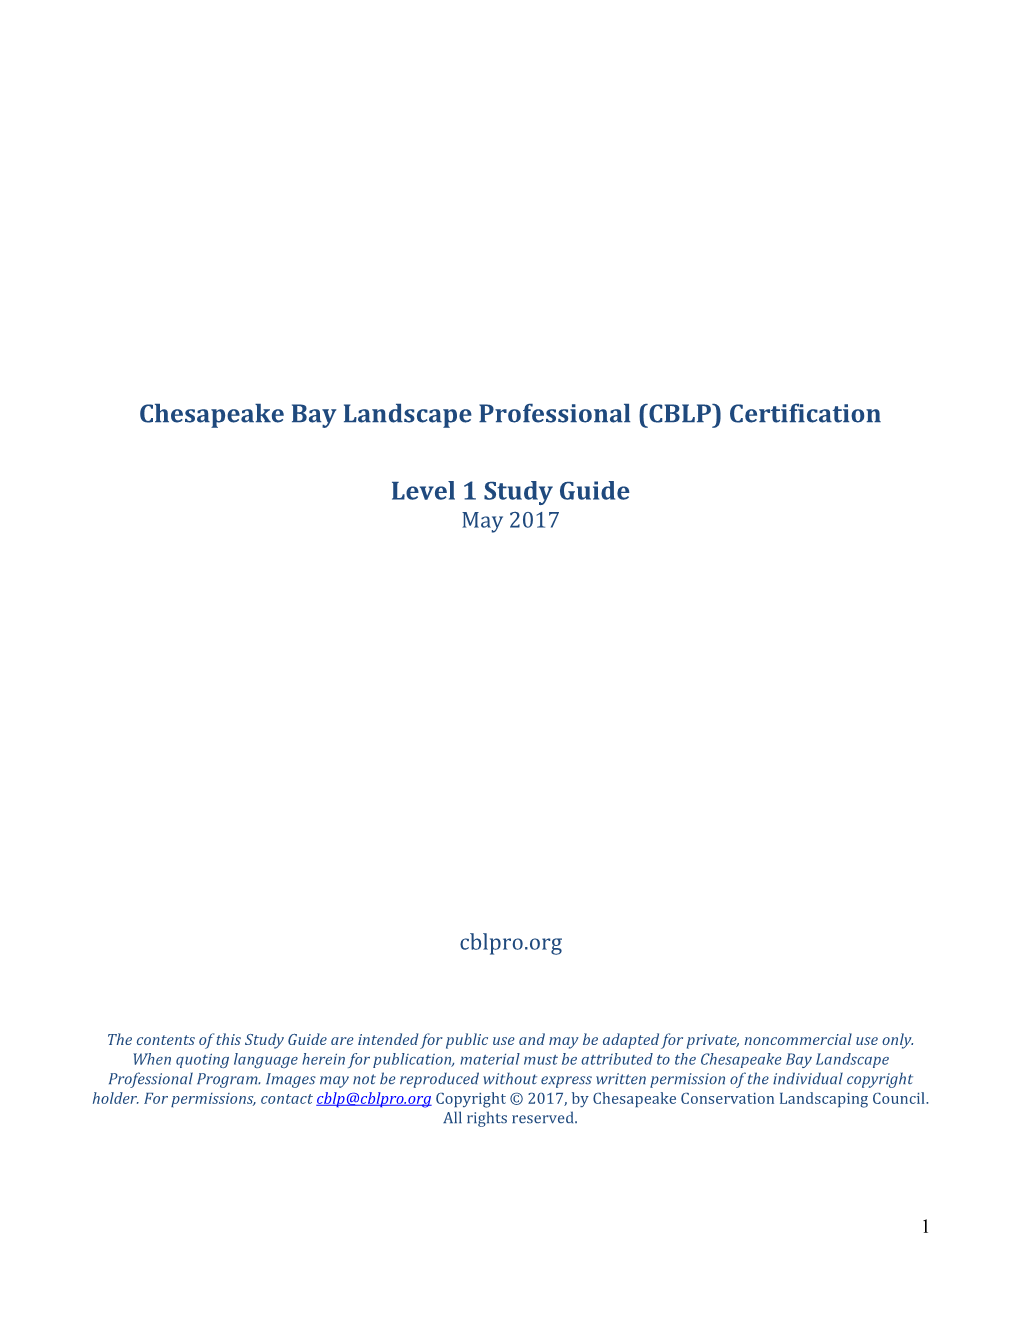 (CBLP) Certification Level 1 Study Guide